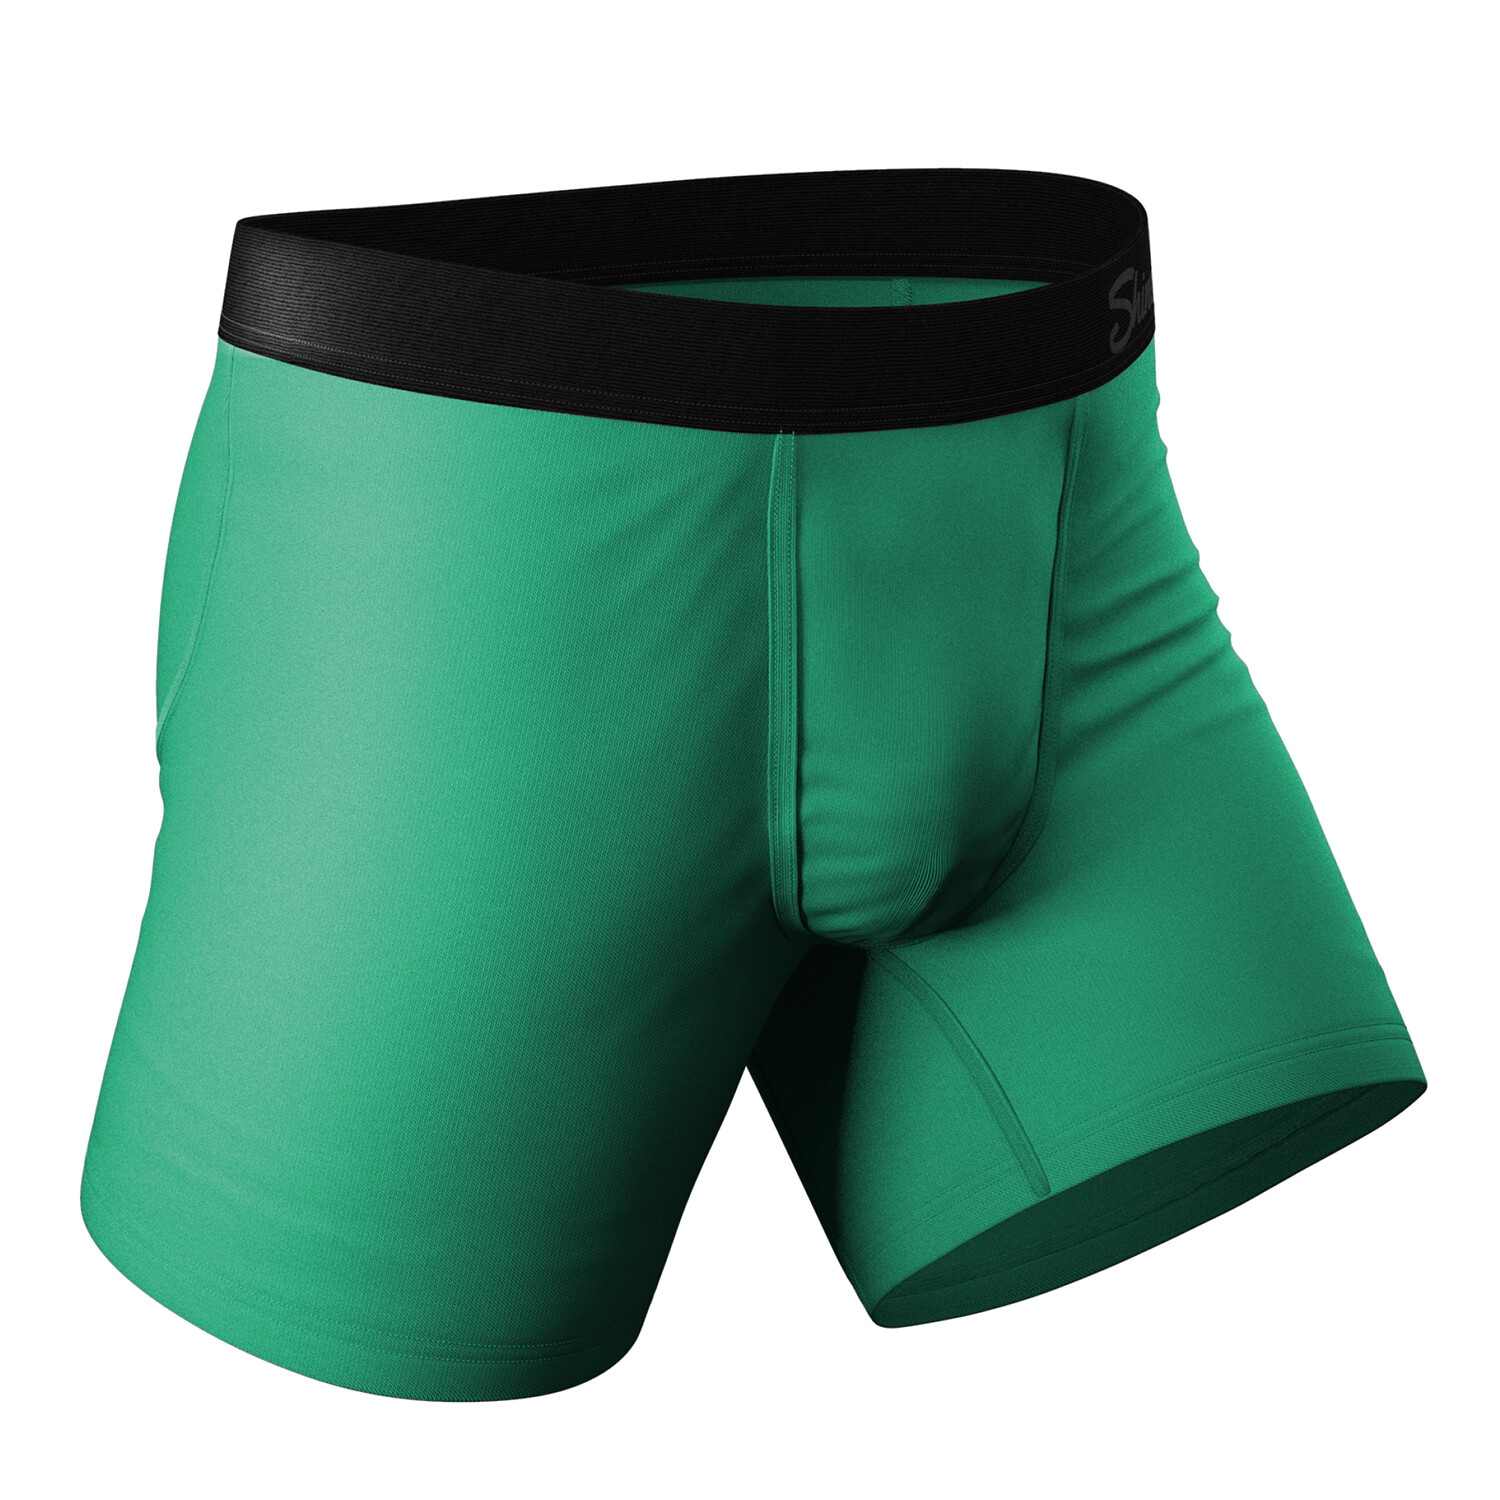 Ball Hammock Mens Pouch Underwear, Boxer Briefs with Fly